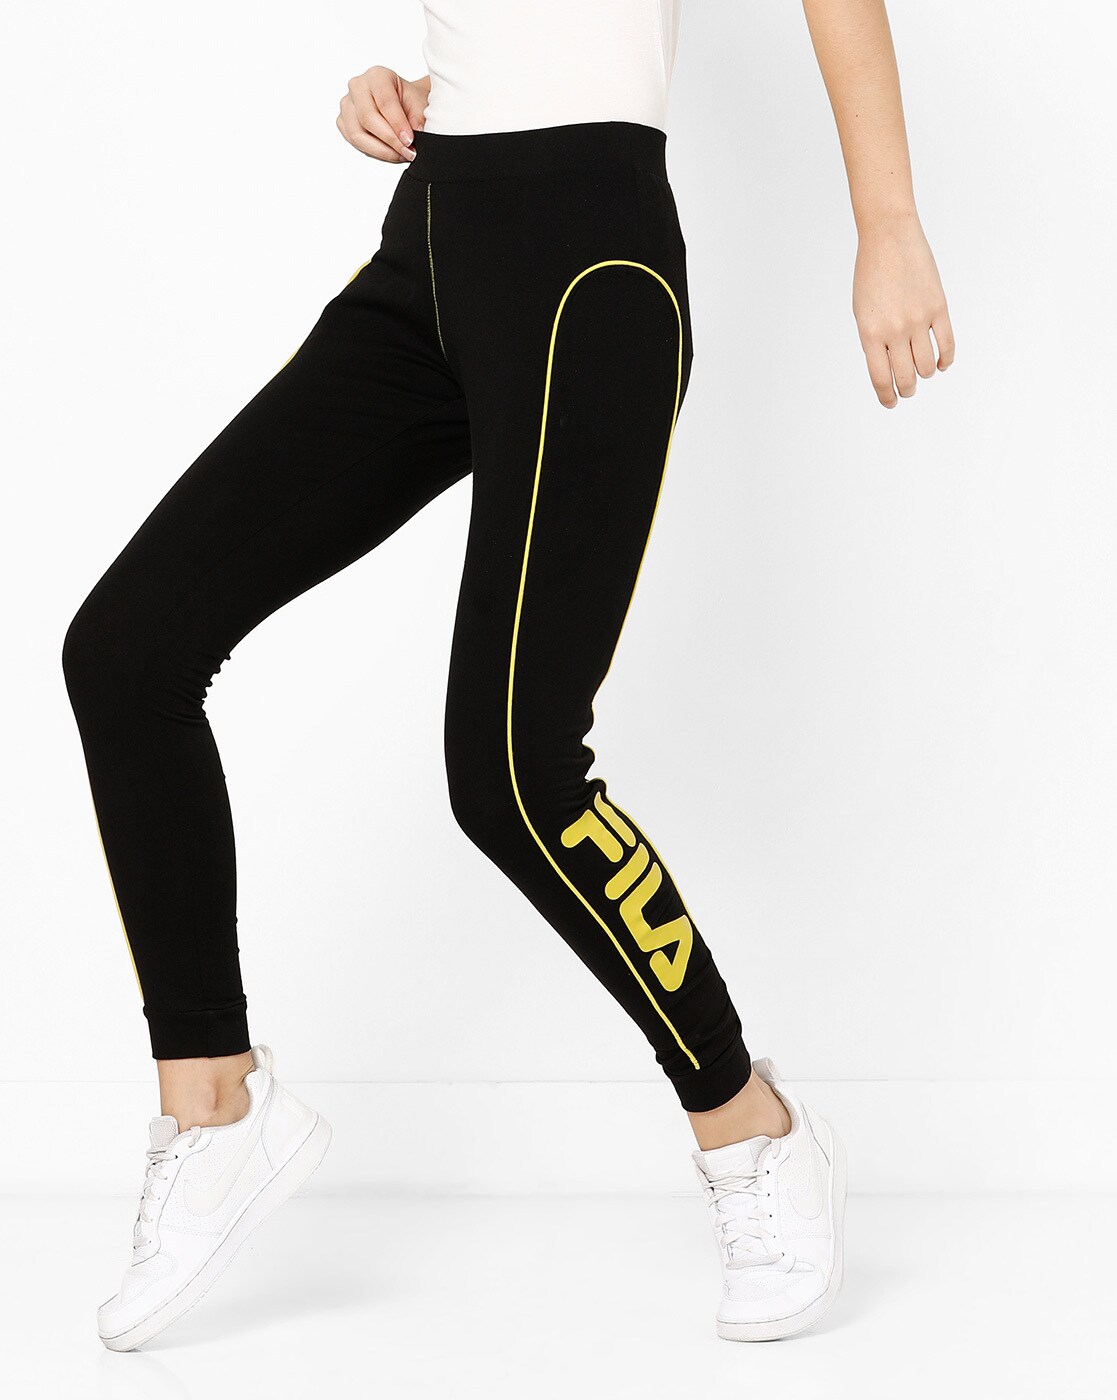 Buy Black Track Pants for Women by FILA Online